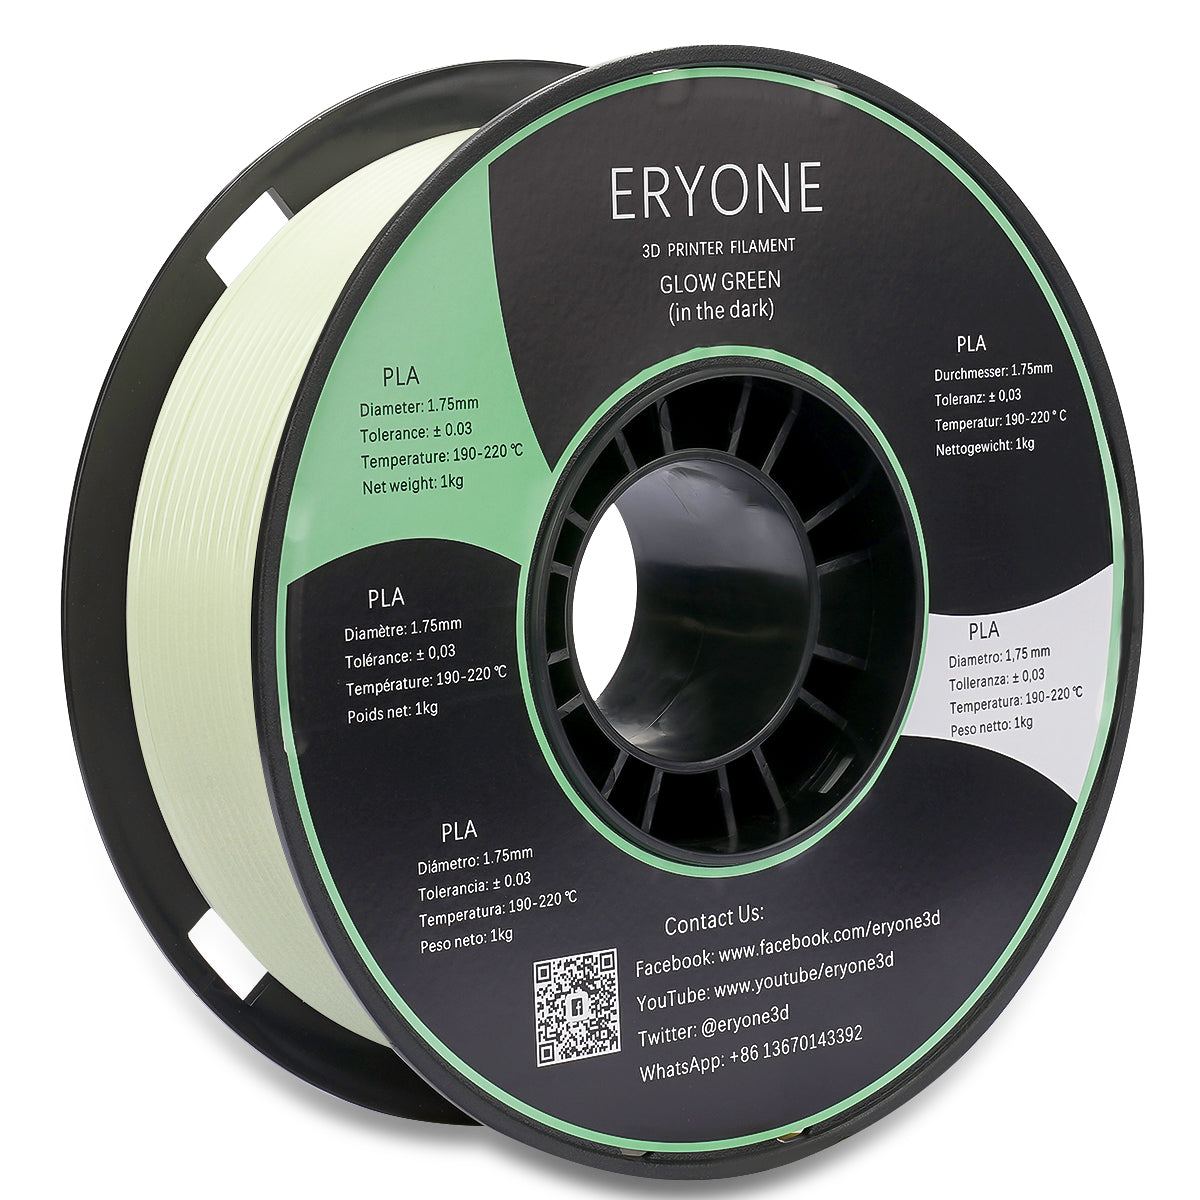 ERYONE Glow Green in The Dark PLA 3D Printer Filament 1.75mm, Dimensional Accuracy +/- 0.05 mm, 1kg (2.2LBS) / Spool